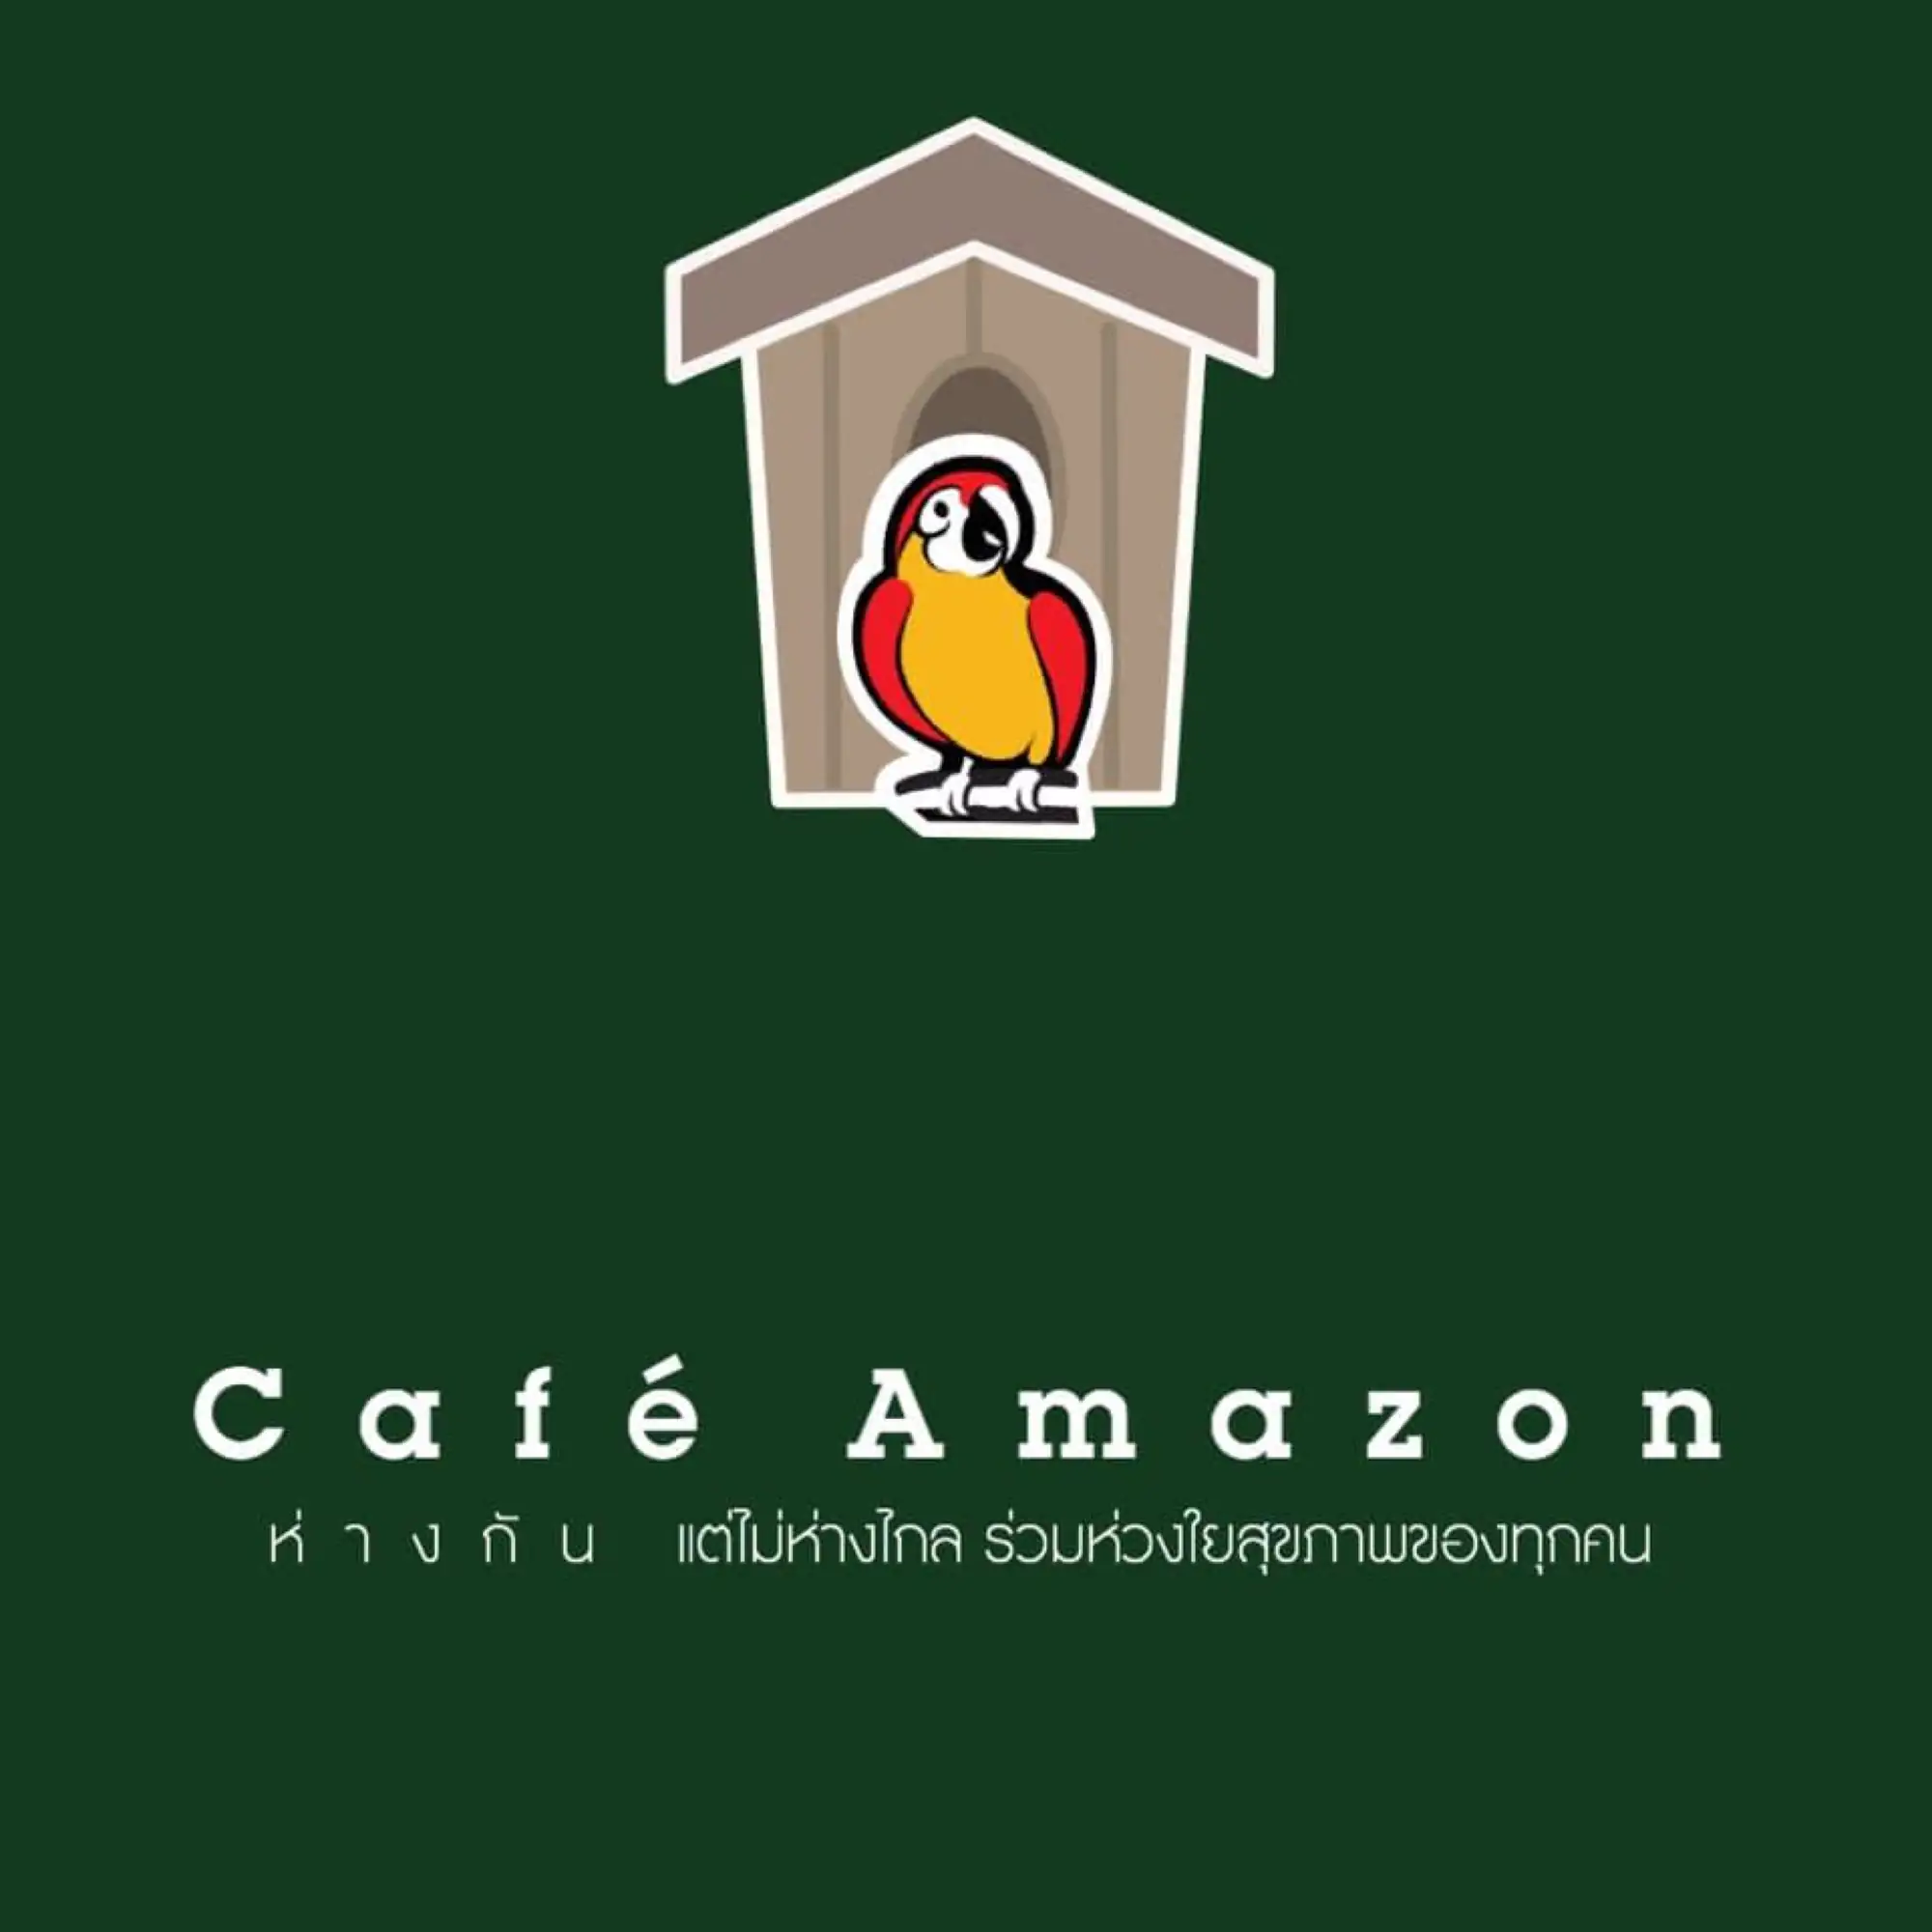 CAFE AMAZON將商標中的鳥兒放回鳥巢，代表居家隔離。（品牌圖片）